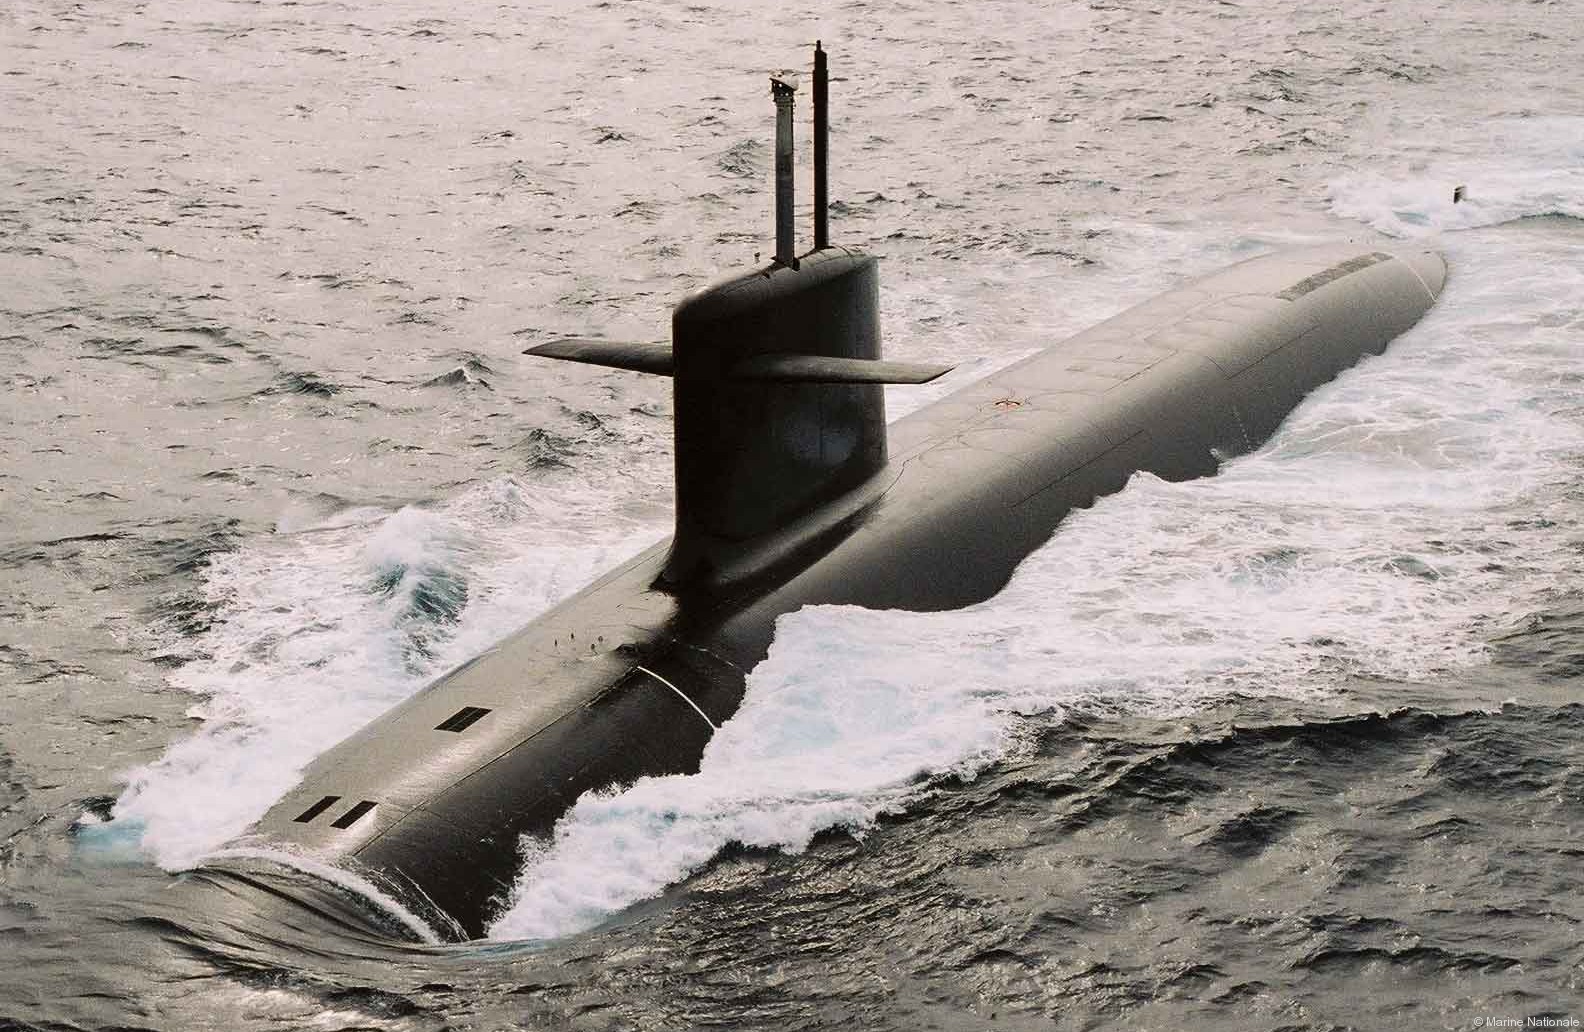 le triomphant class ballistic missile submarine ssbn snle french navy marine nationale temeraire vigilant terrible 14